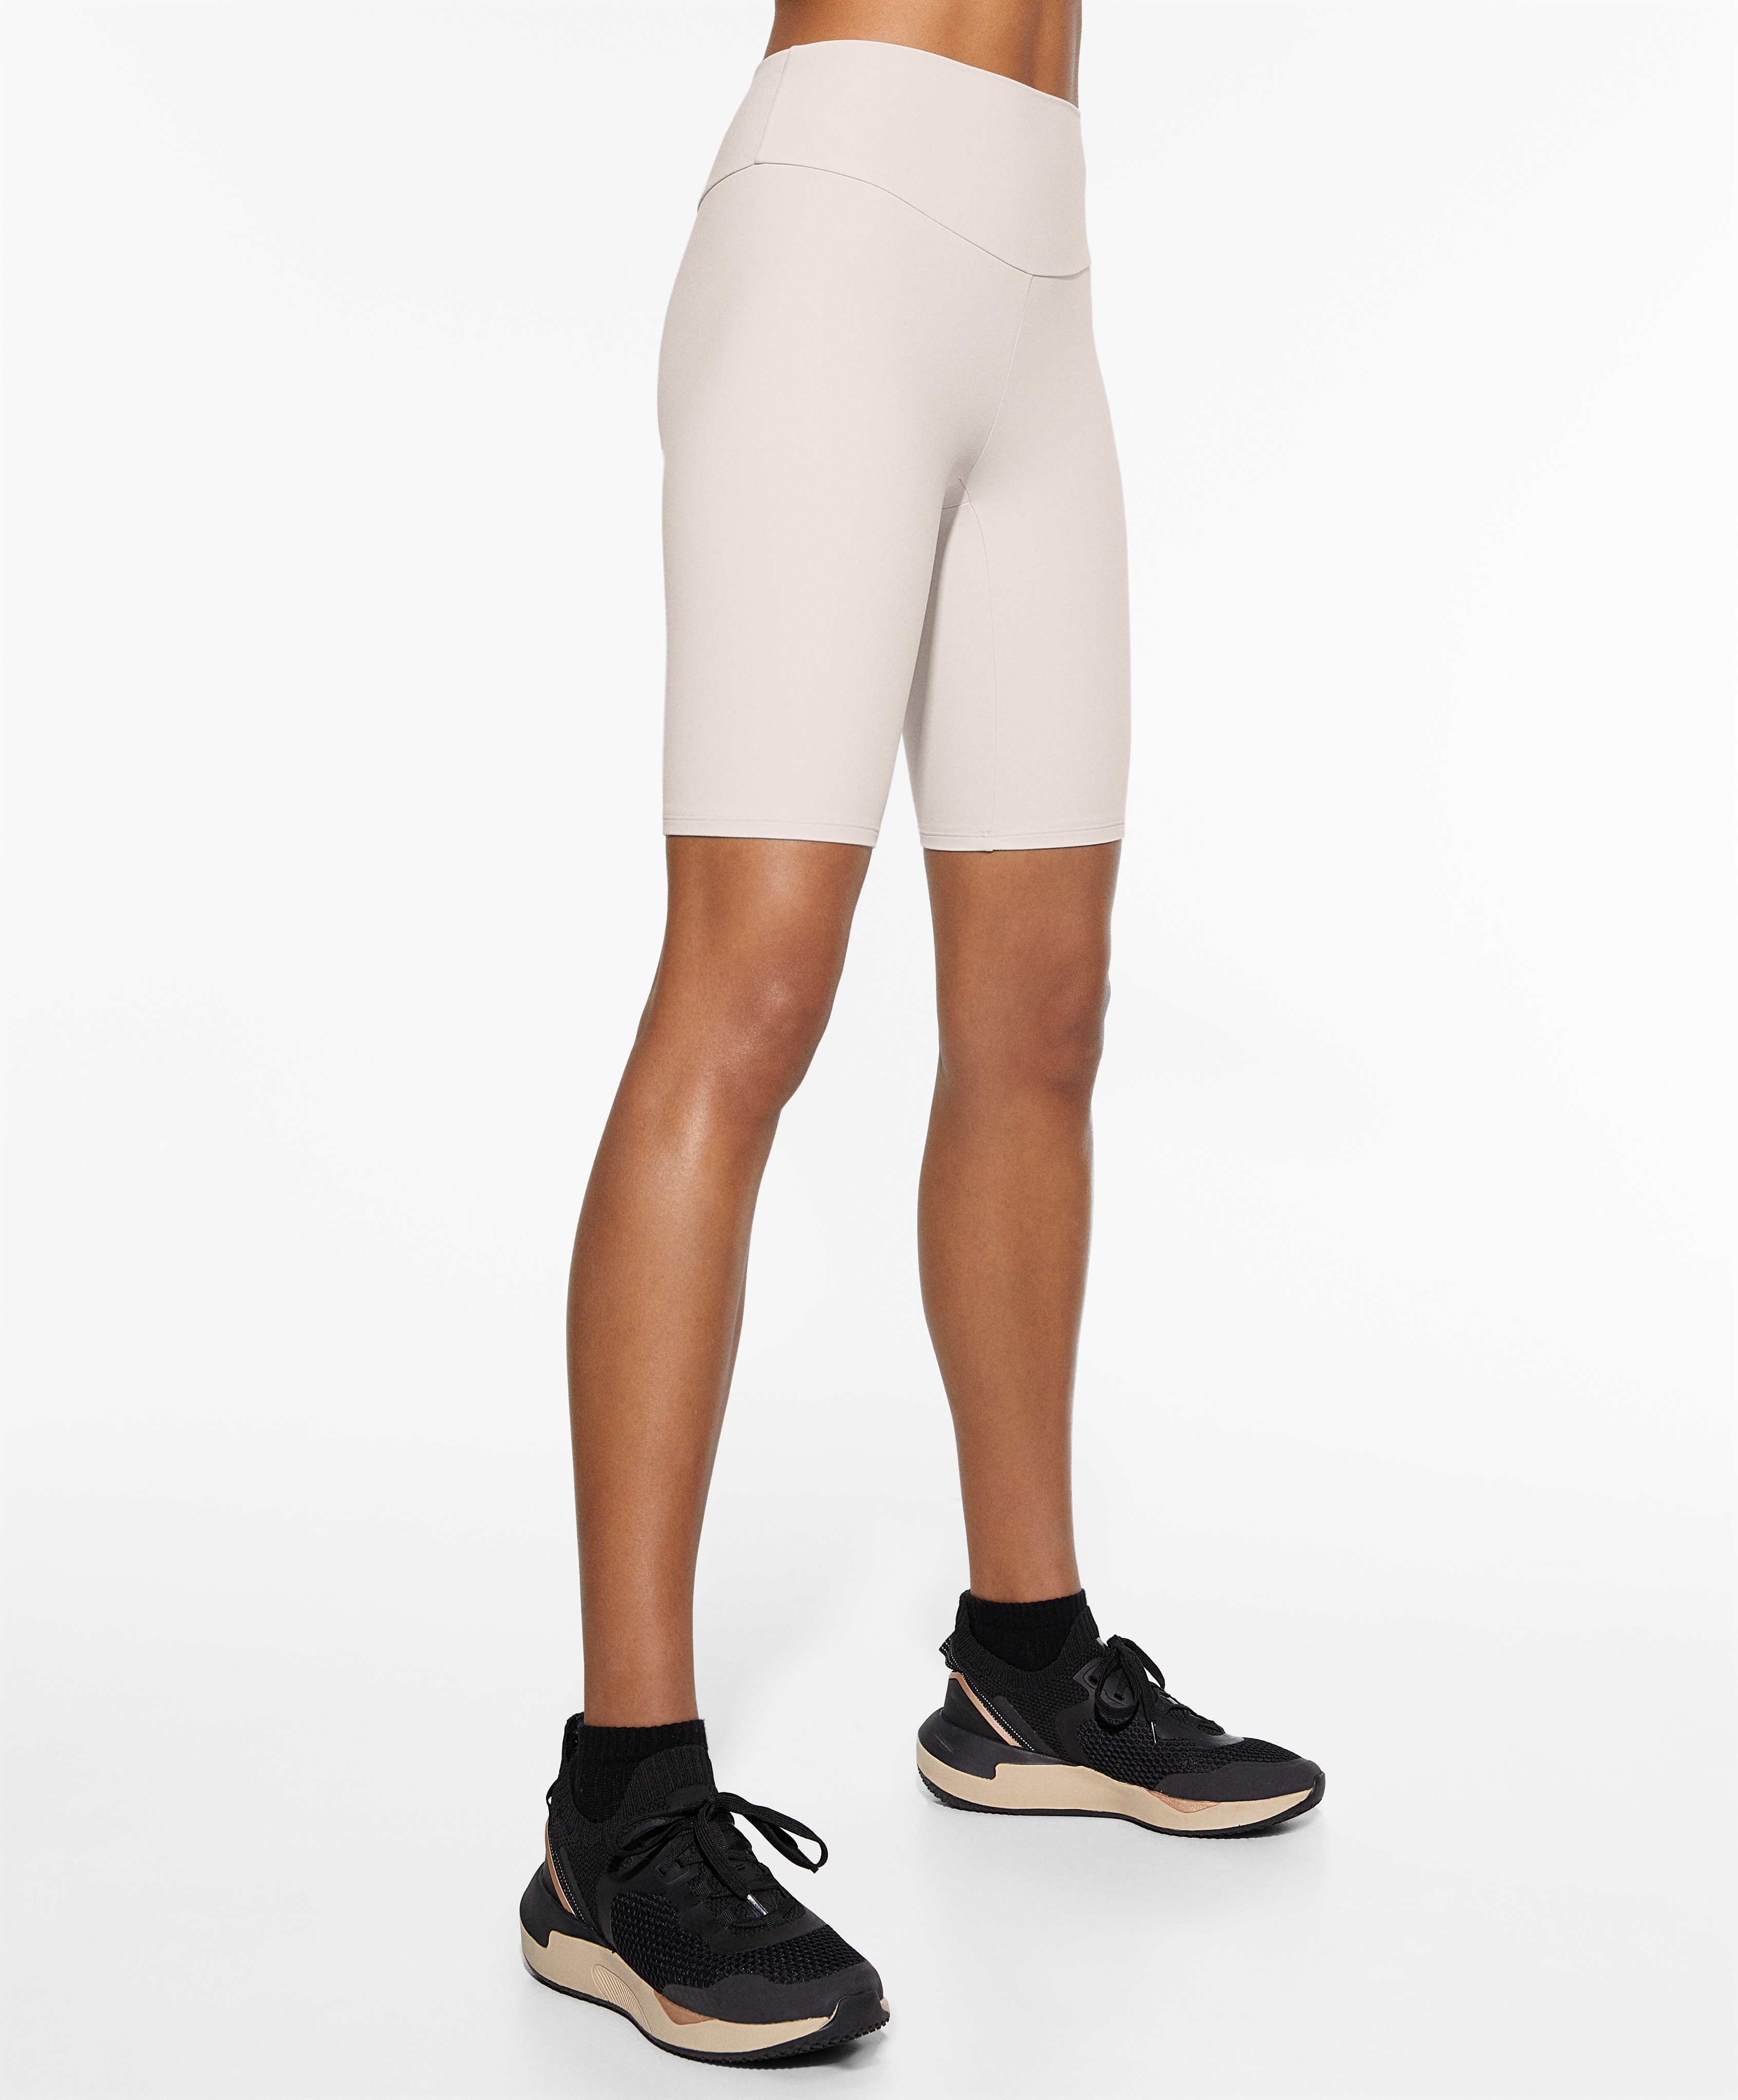 Comfortlux high-rise 25cm cycle leggings